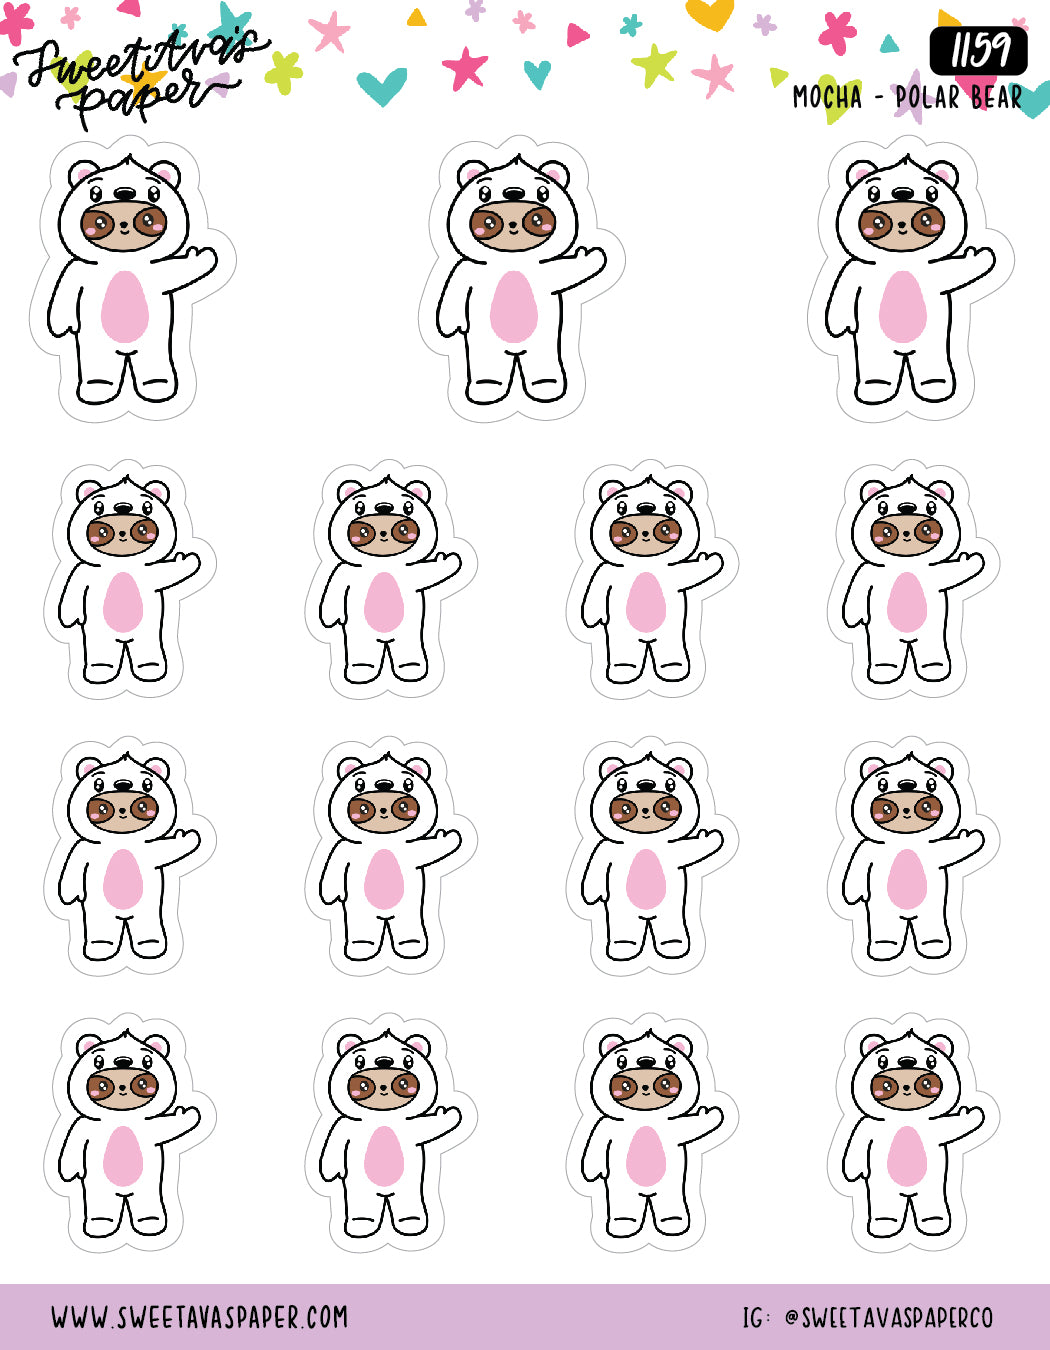 Polar Bear Costume Planner Stickers - Mocha The Sloth [1159]